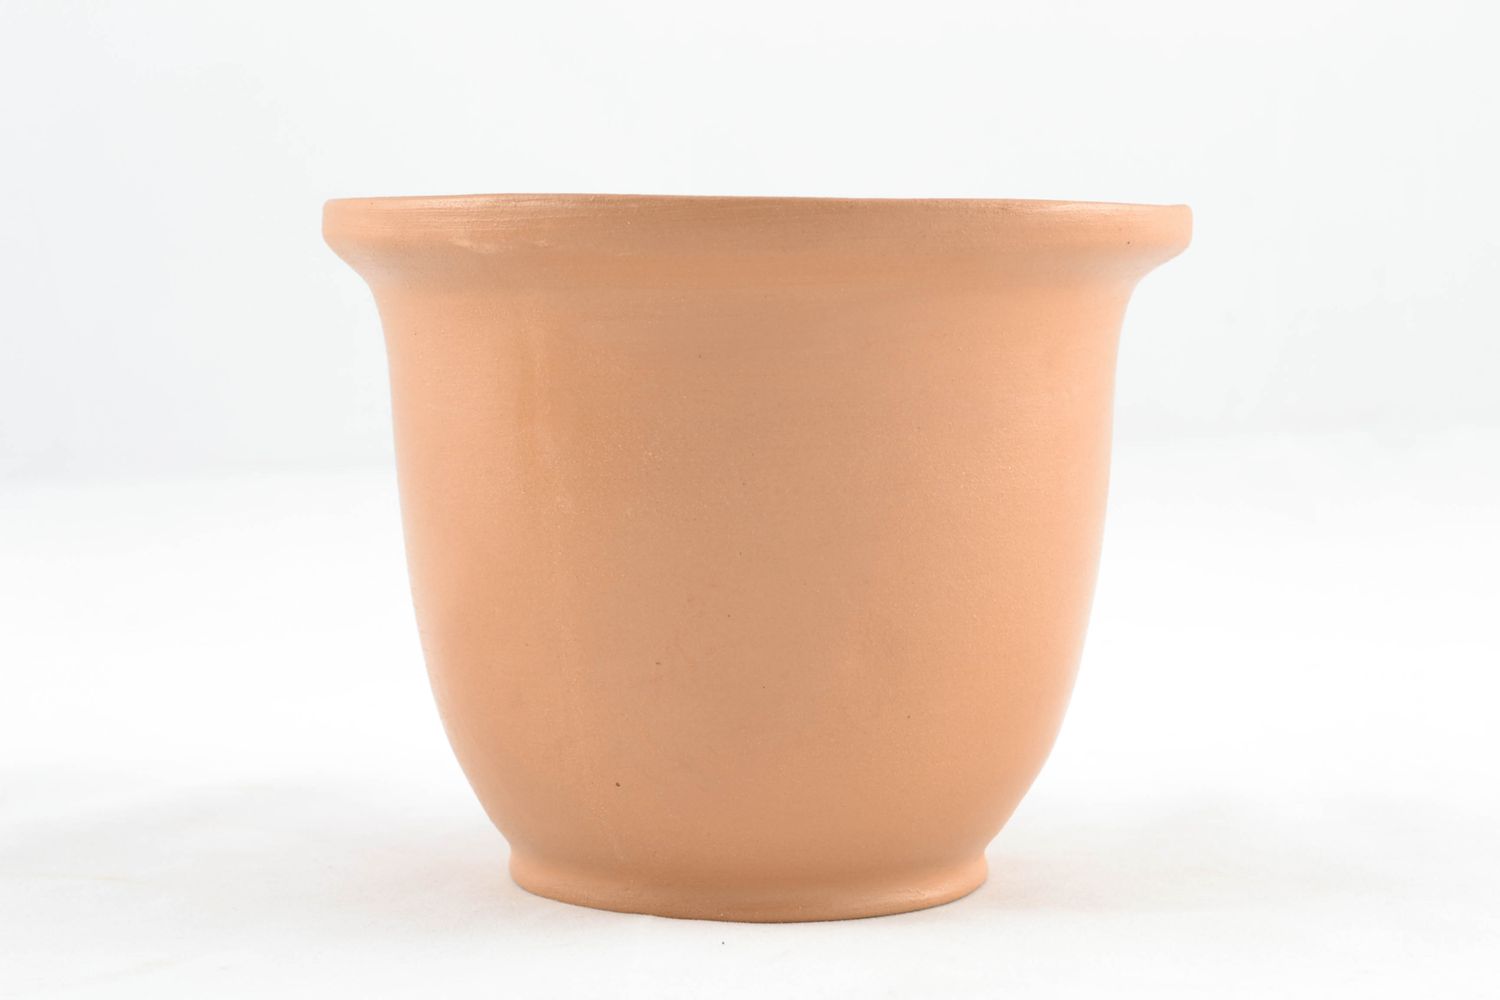 Plain ceramic clay pot in beige color 1 lb photo 3